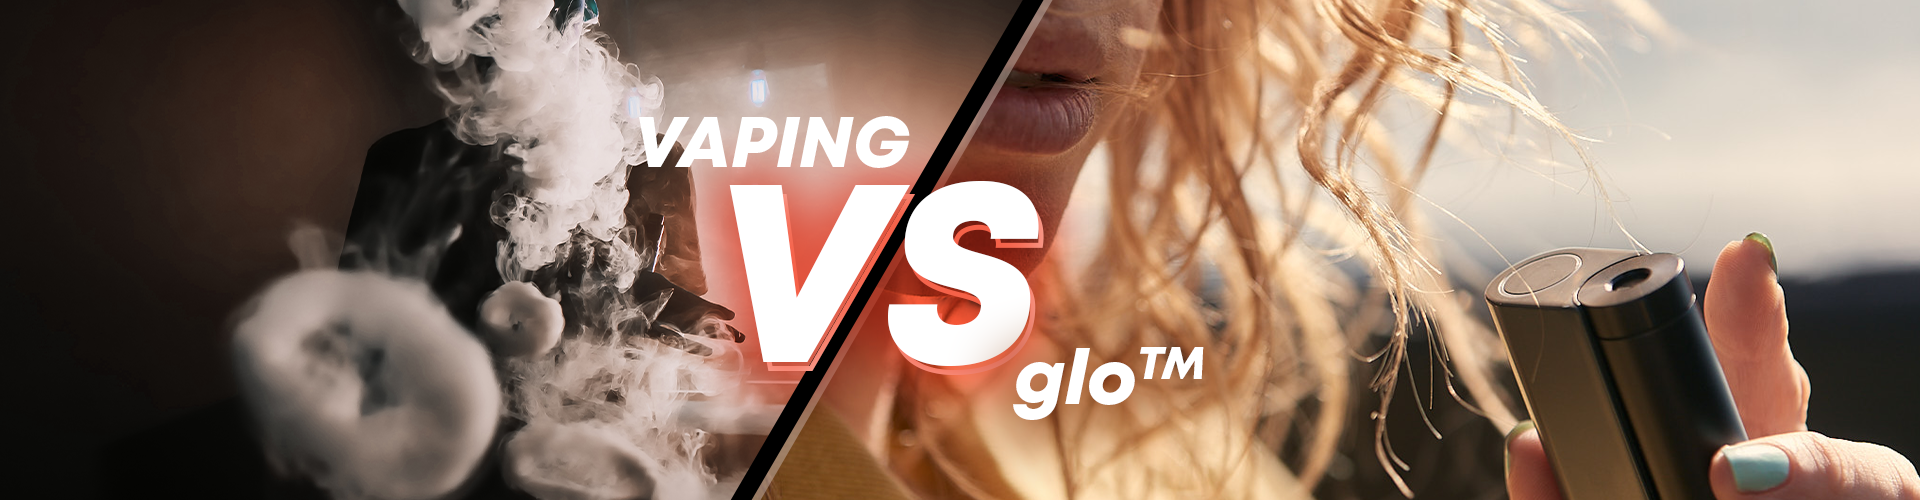 vaping-versus-glo